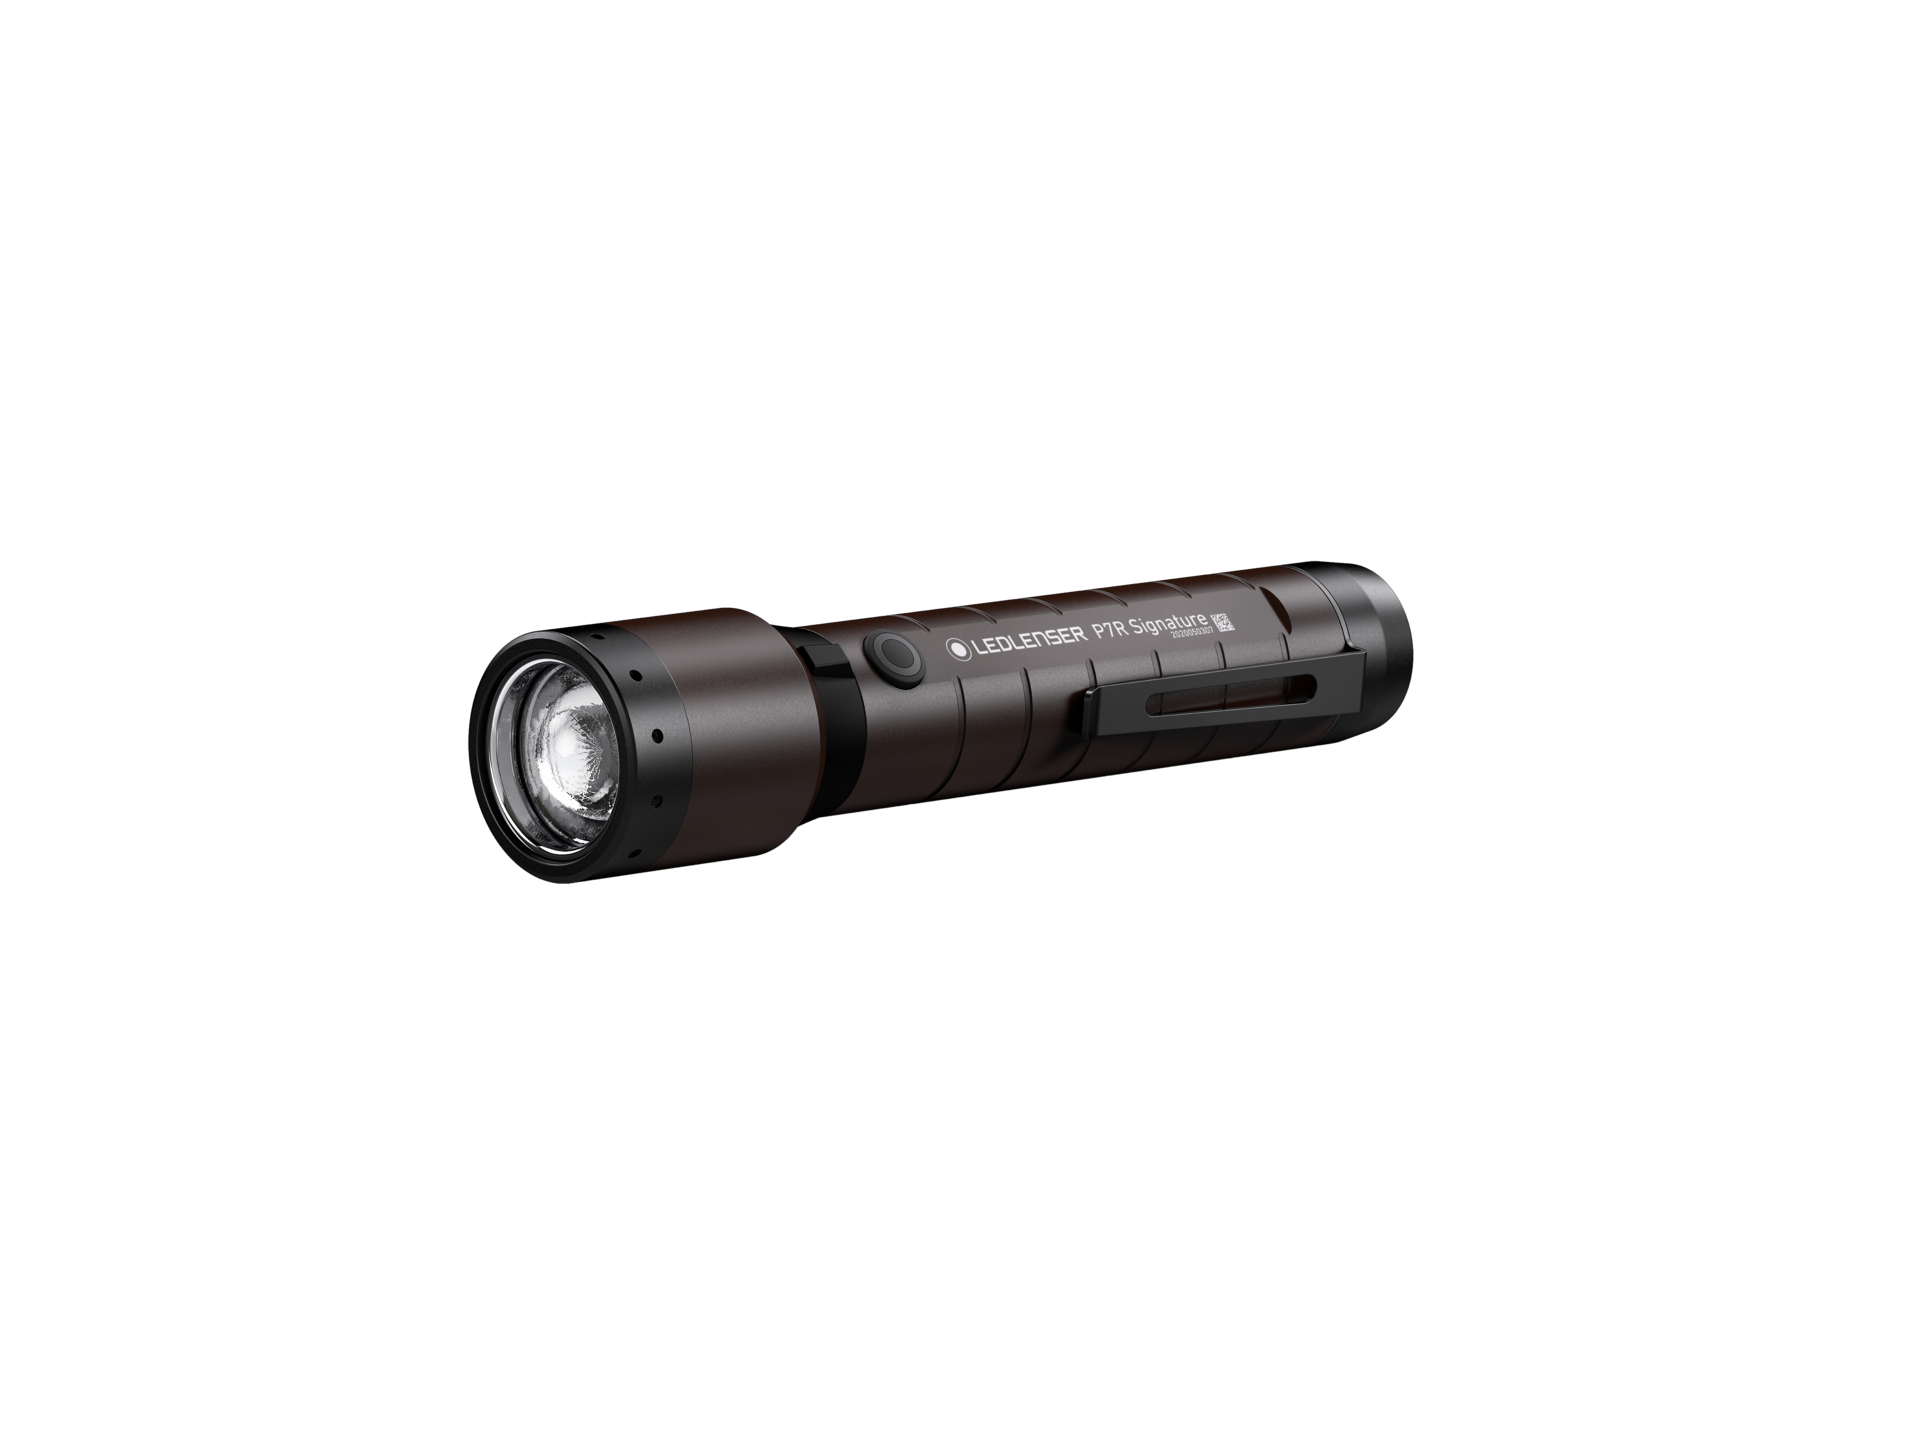 P7R Core: Rechargeable flashlight from Ledlenser